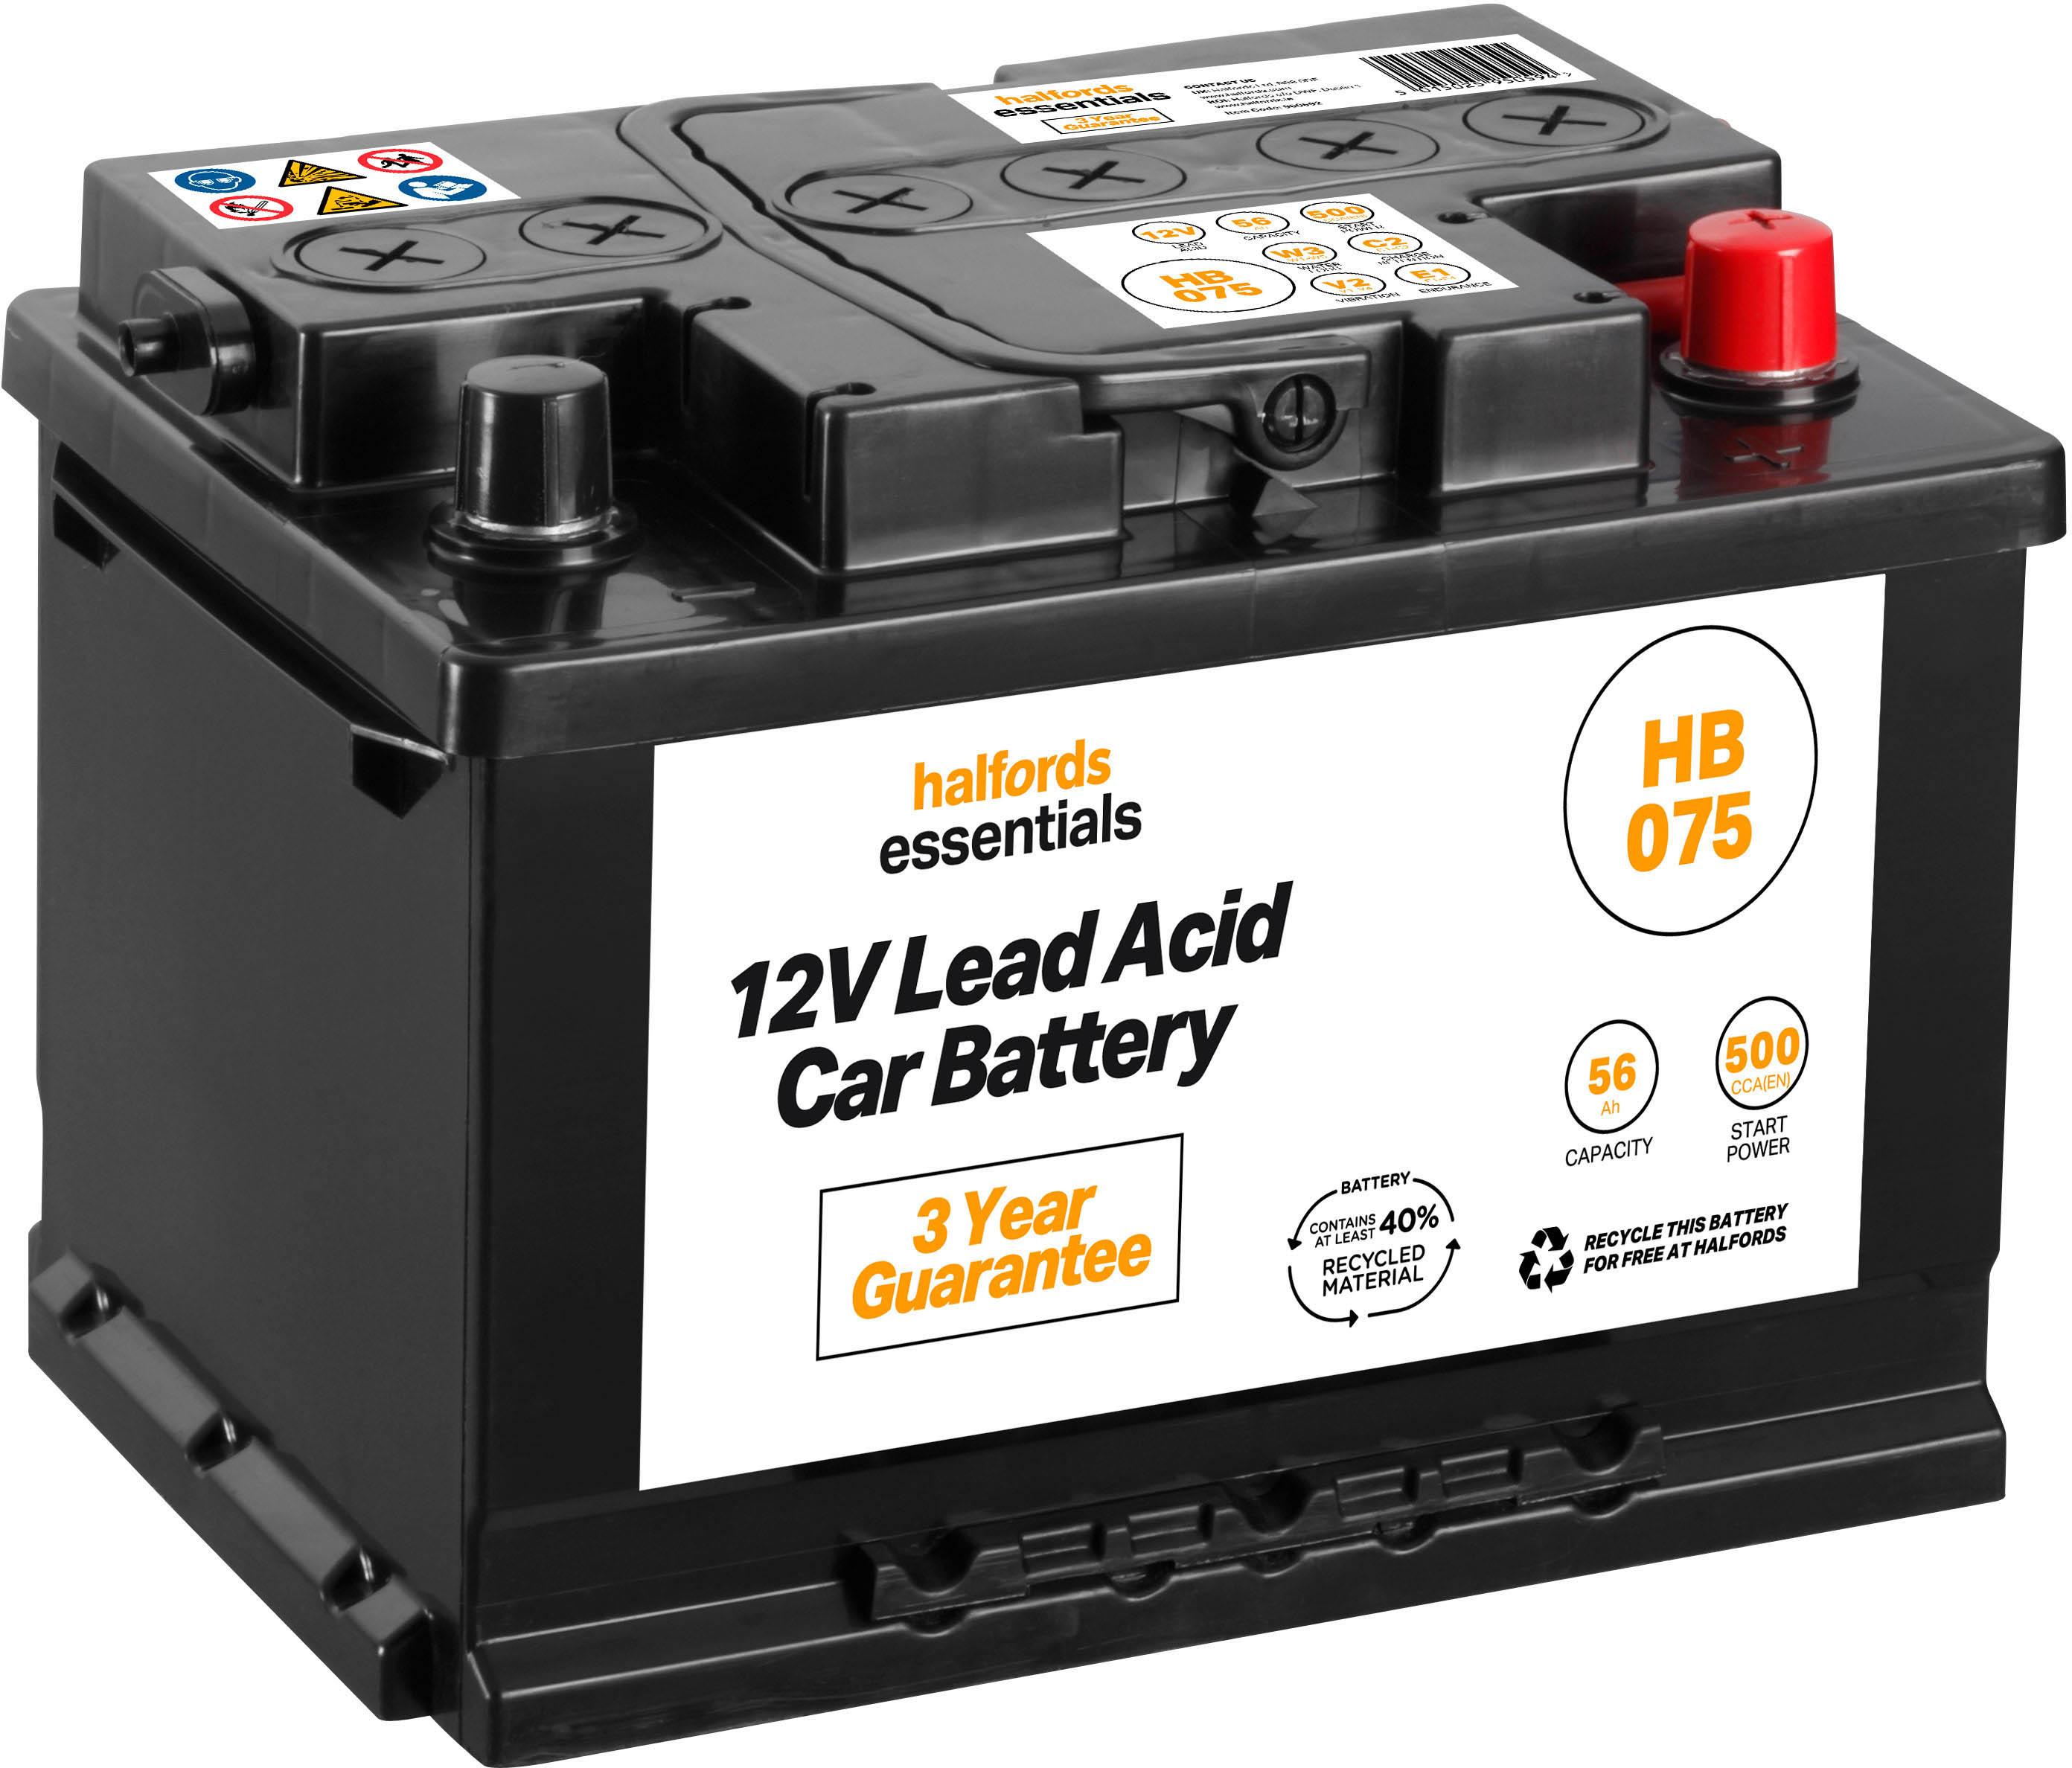 Halfords Hb075 Lead Acid 12V Car Battery 3 Year Guarantee